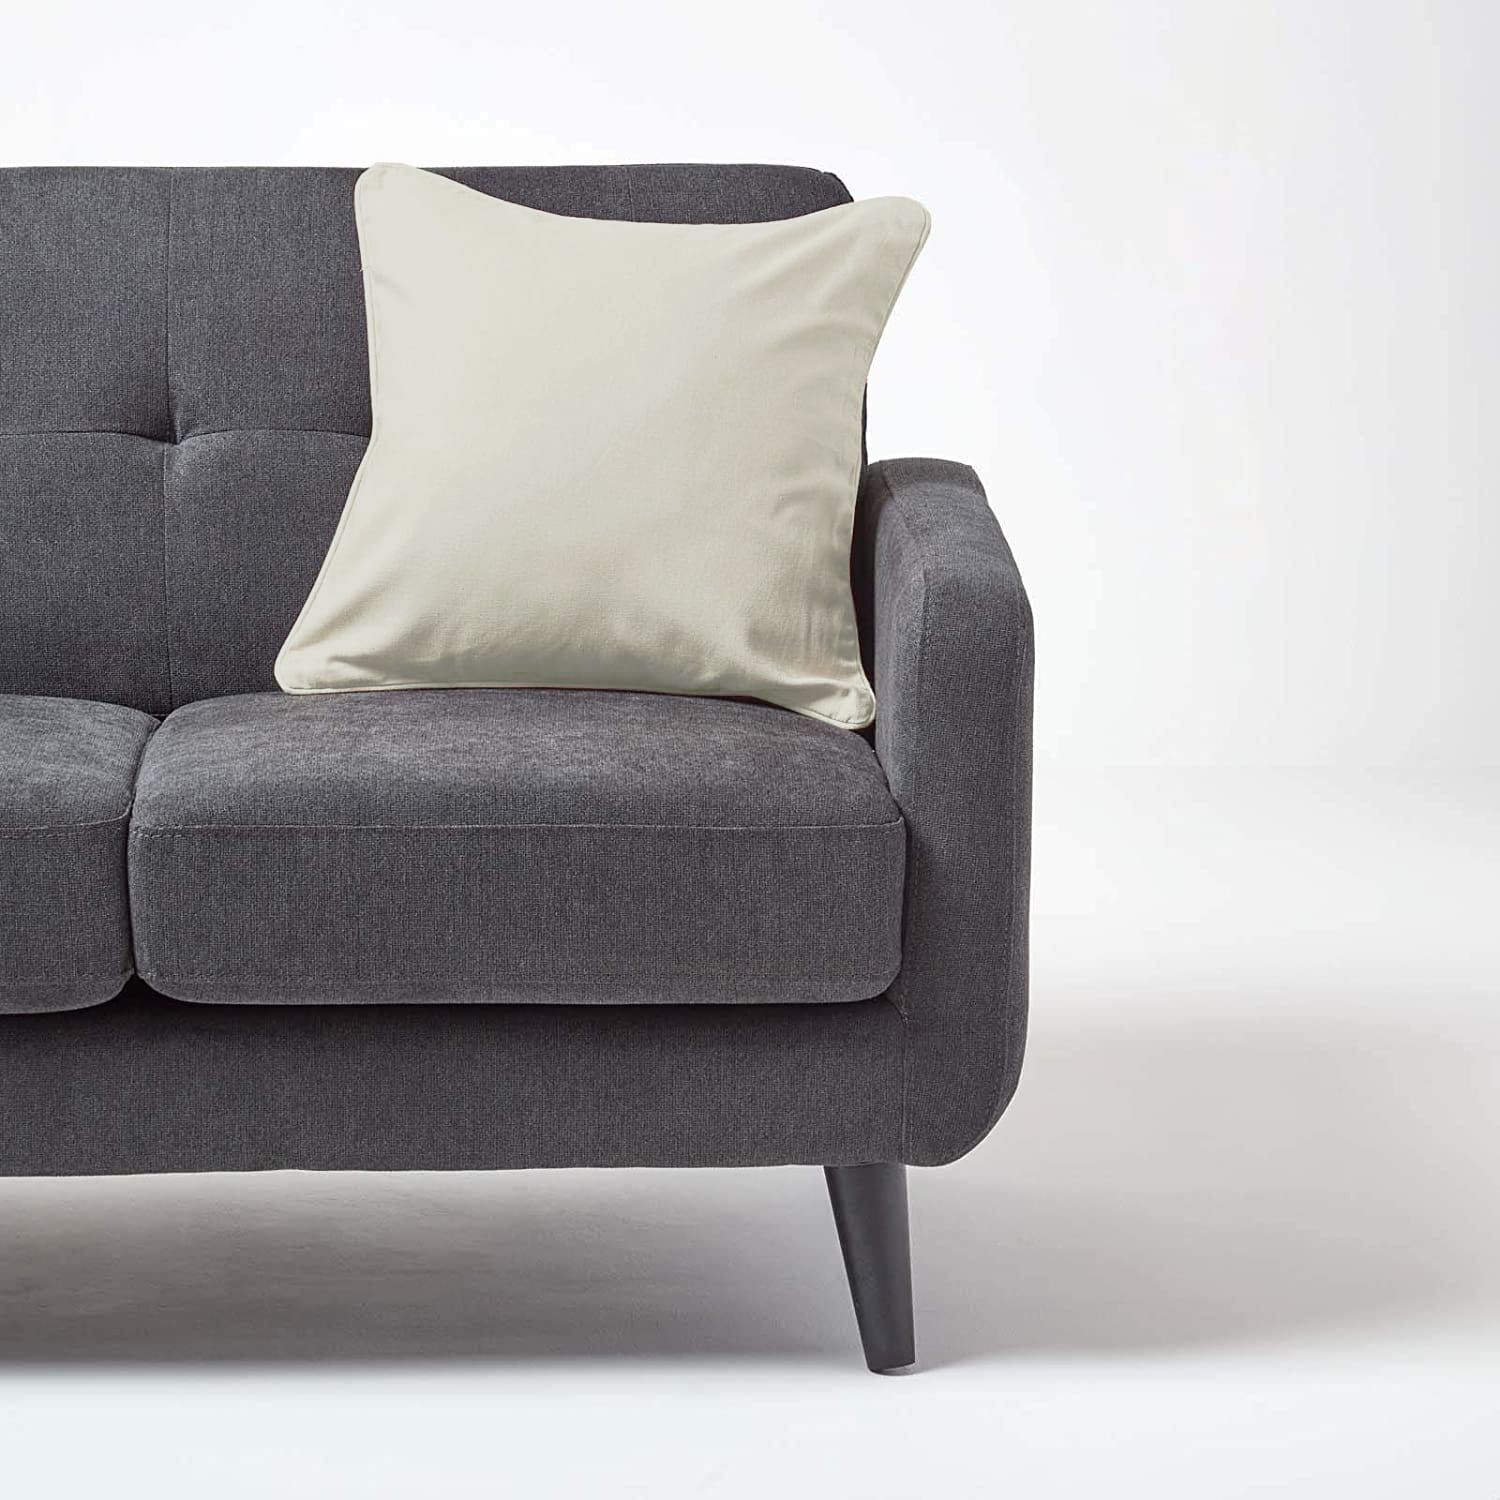 Plain Cotton Decorative Cushion Cover 1 Pc in Khaki online at best prices